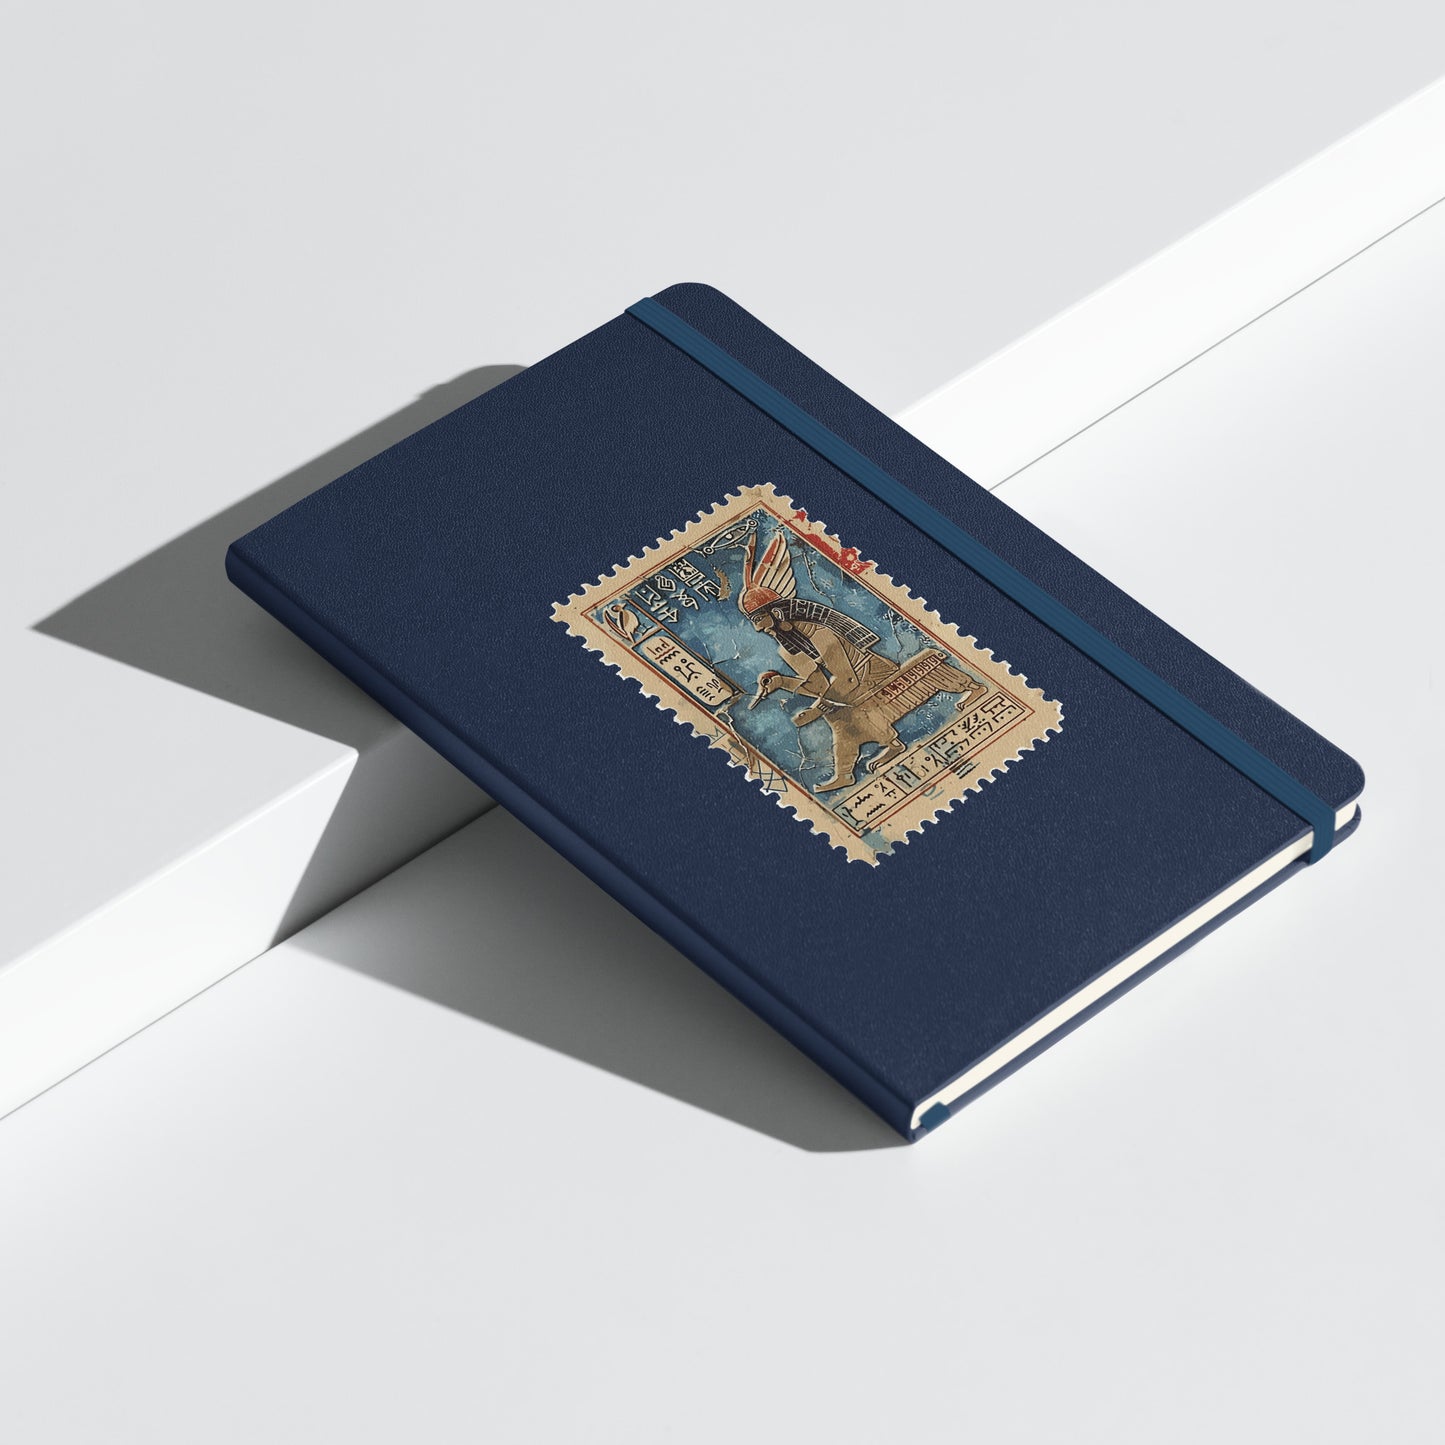 Anunakiz Enki Stamp Hardcover bound notebook